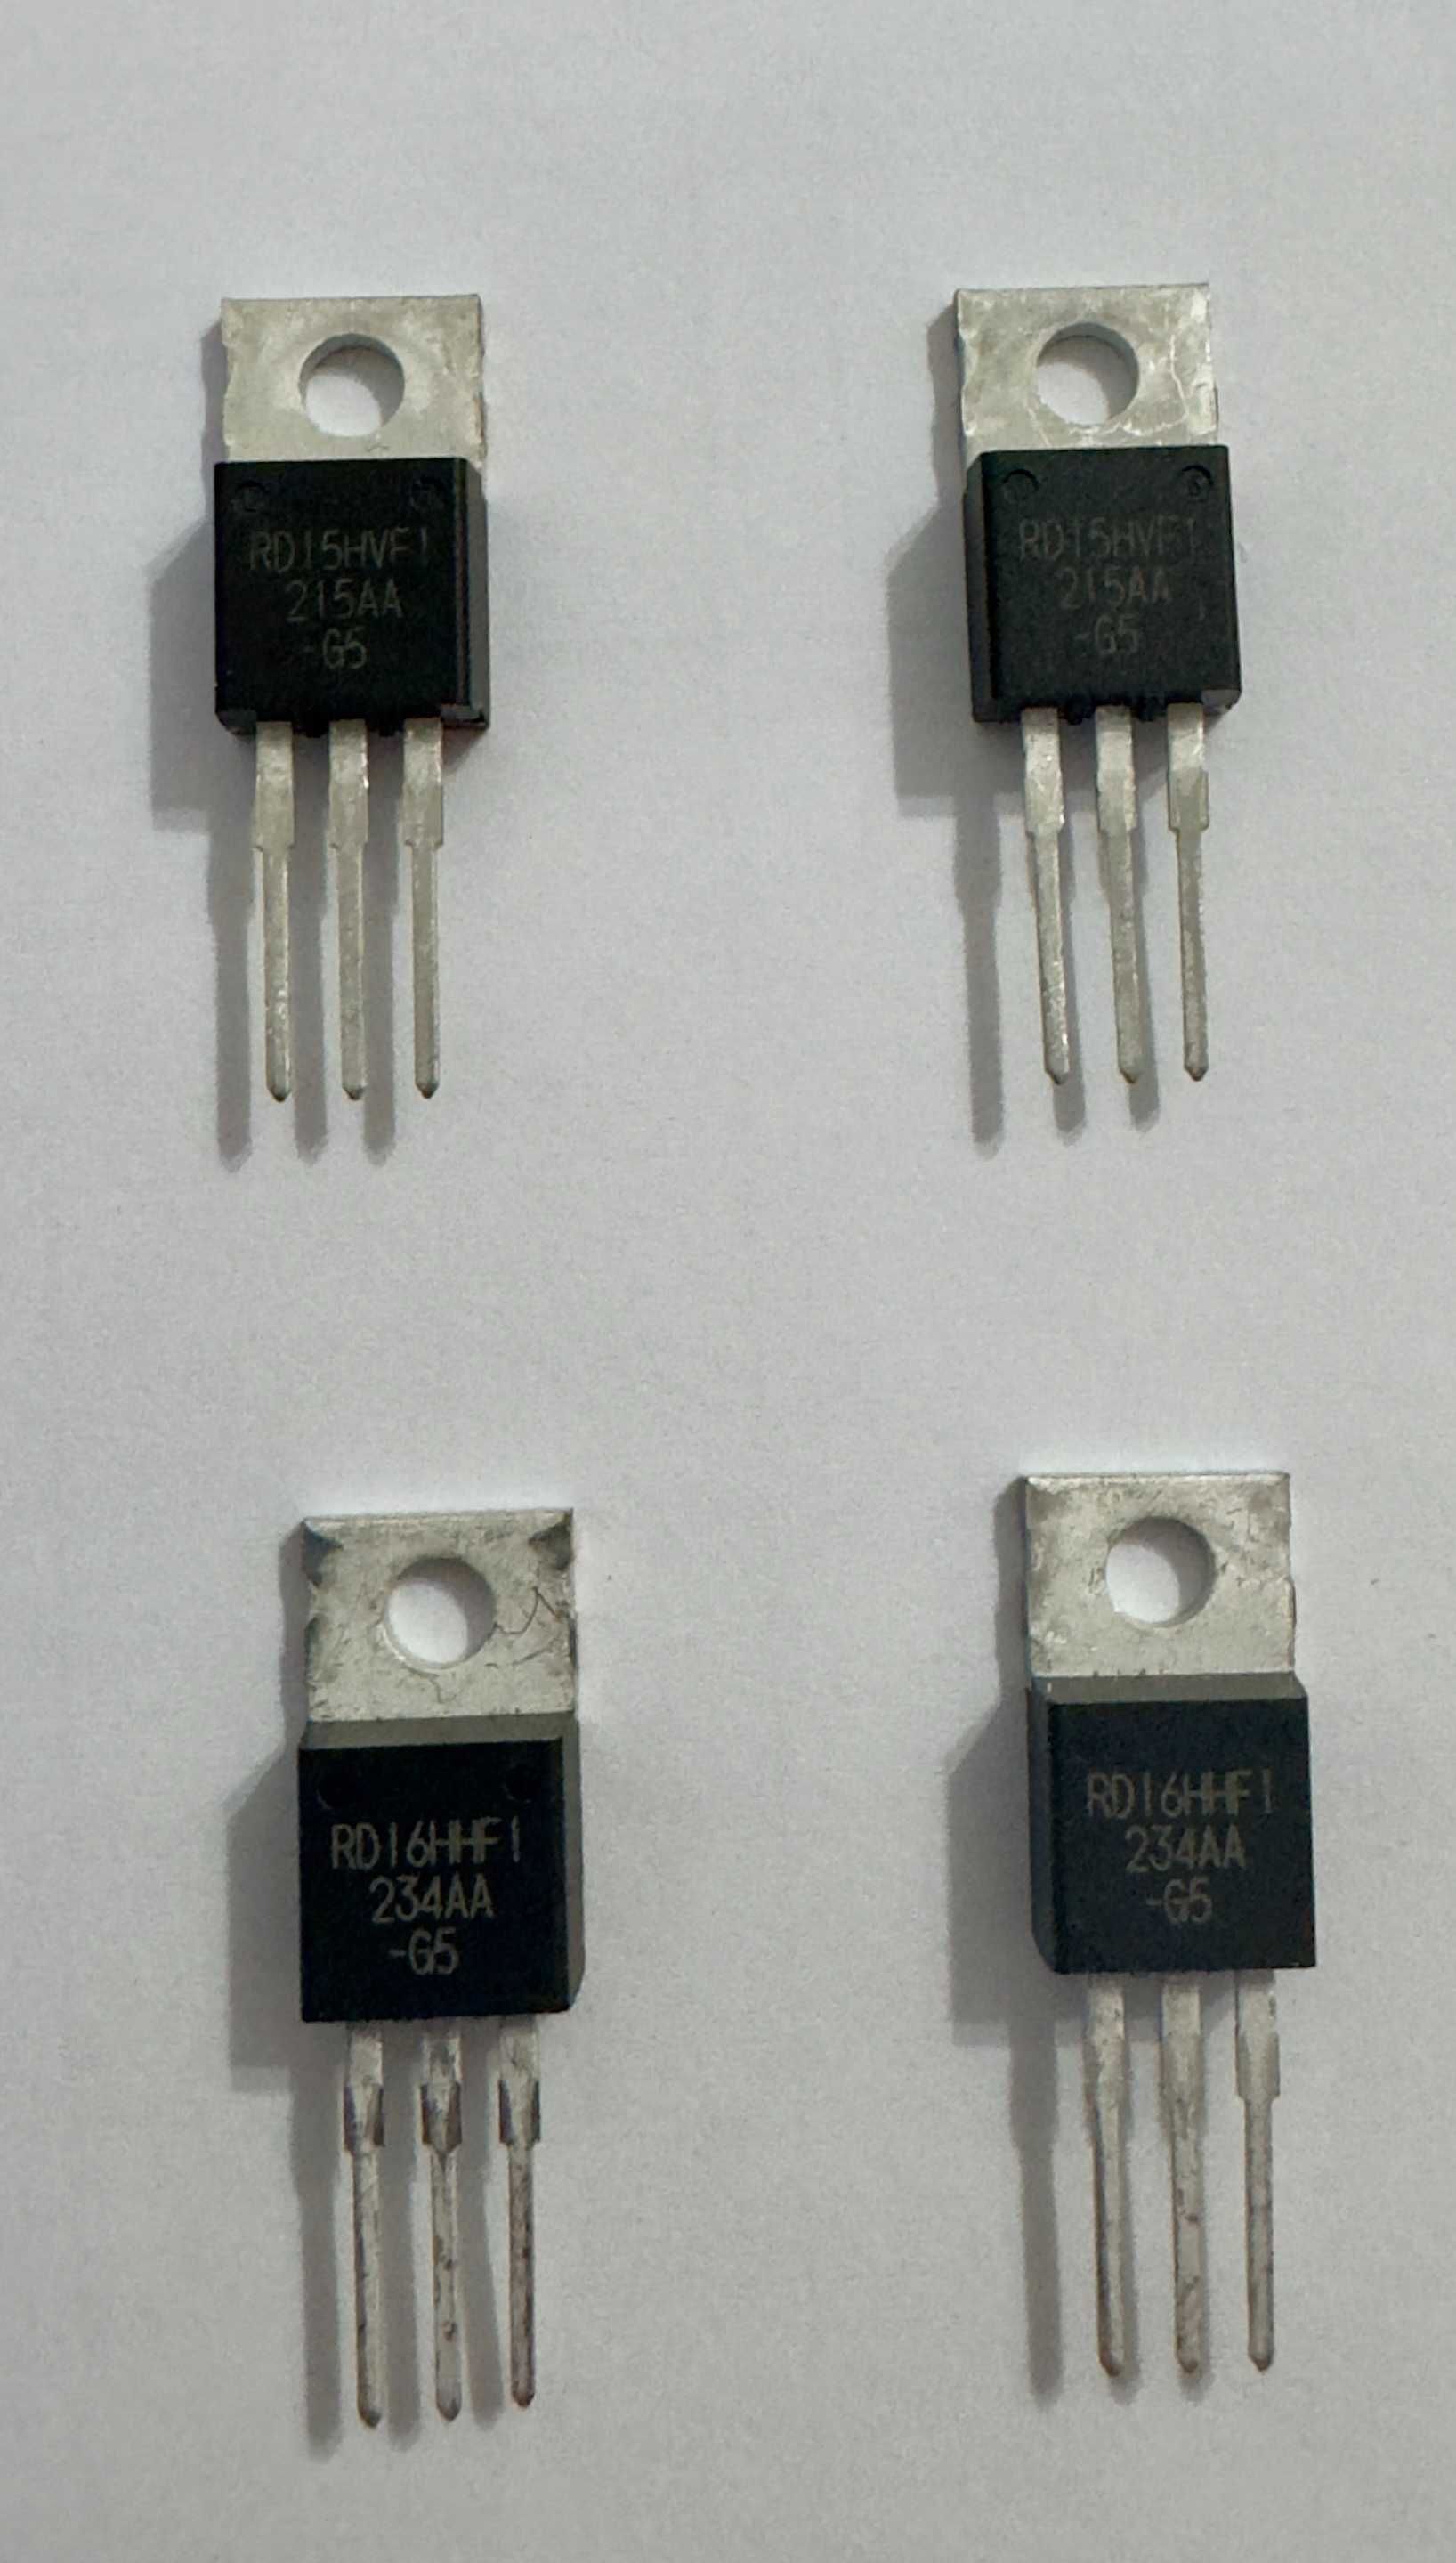 Tranzistoare MOS-FET RD15HVF1 si RD16HHF1 - finali statii radio